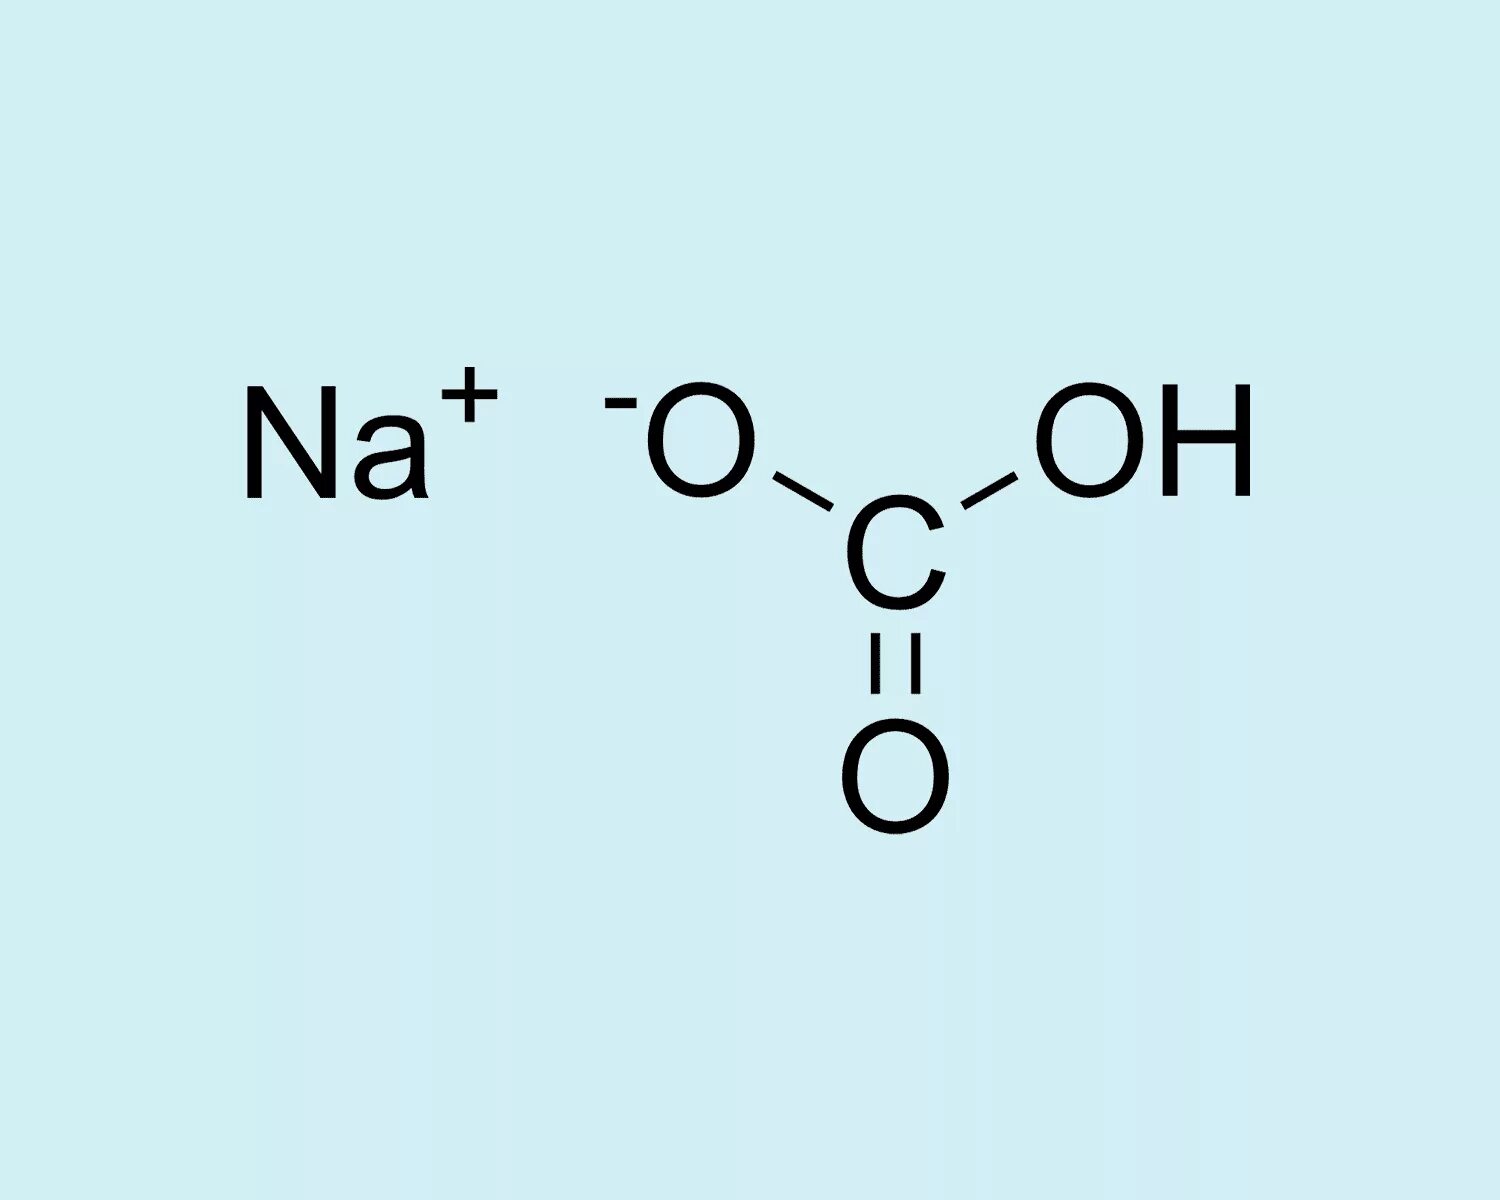 Nahco3 р р. Гидрокарбонат натрия формула химическая. Бикарбонат натрия формула. Бикарбонат натрия структурная формула. Сода формула гидрокарбонат натрия.